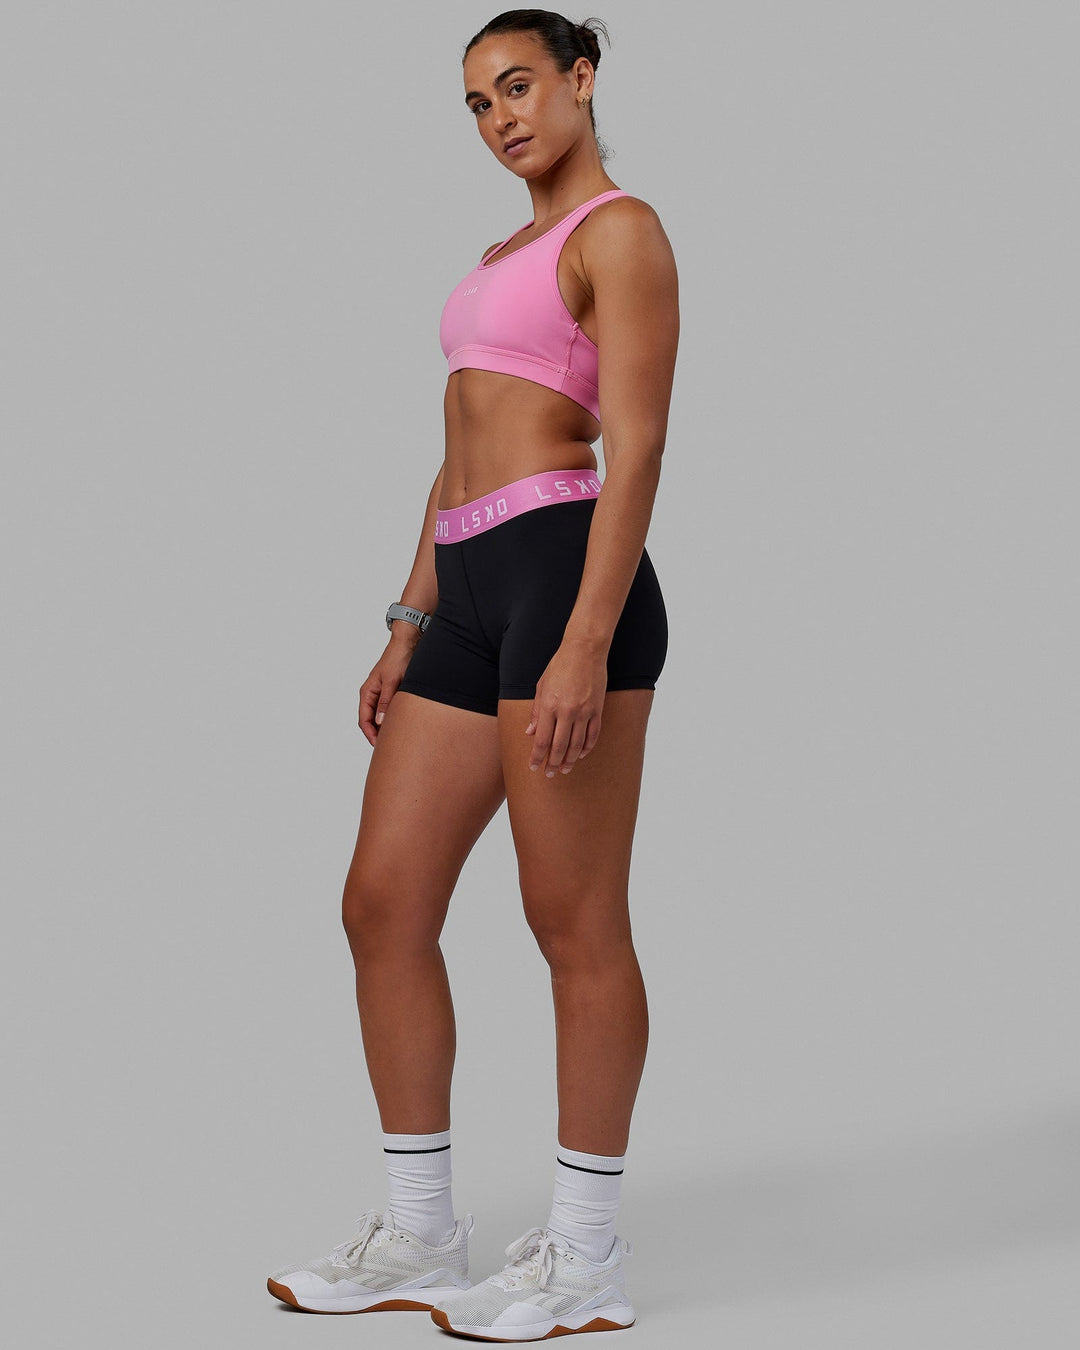 Woman wearing Extend Sports Bra - Spark Pink